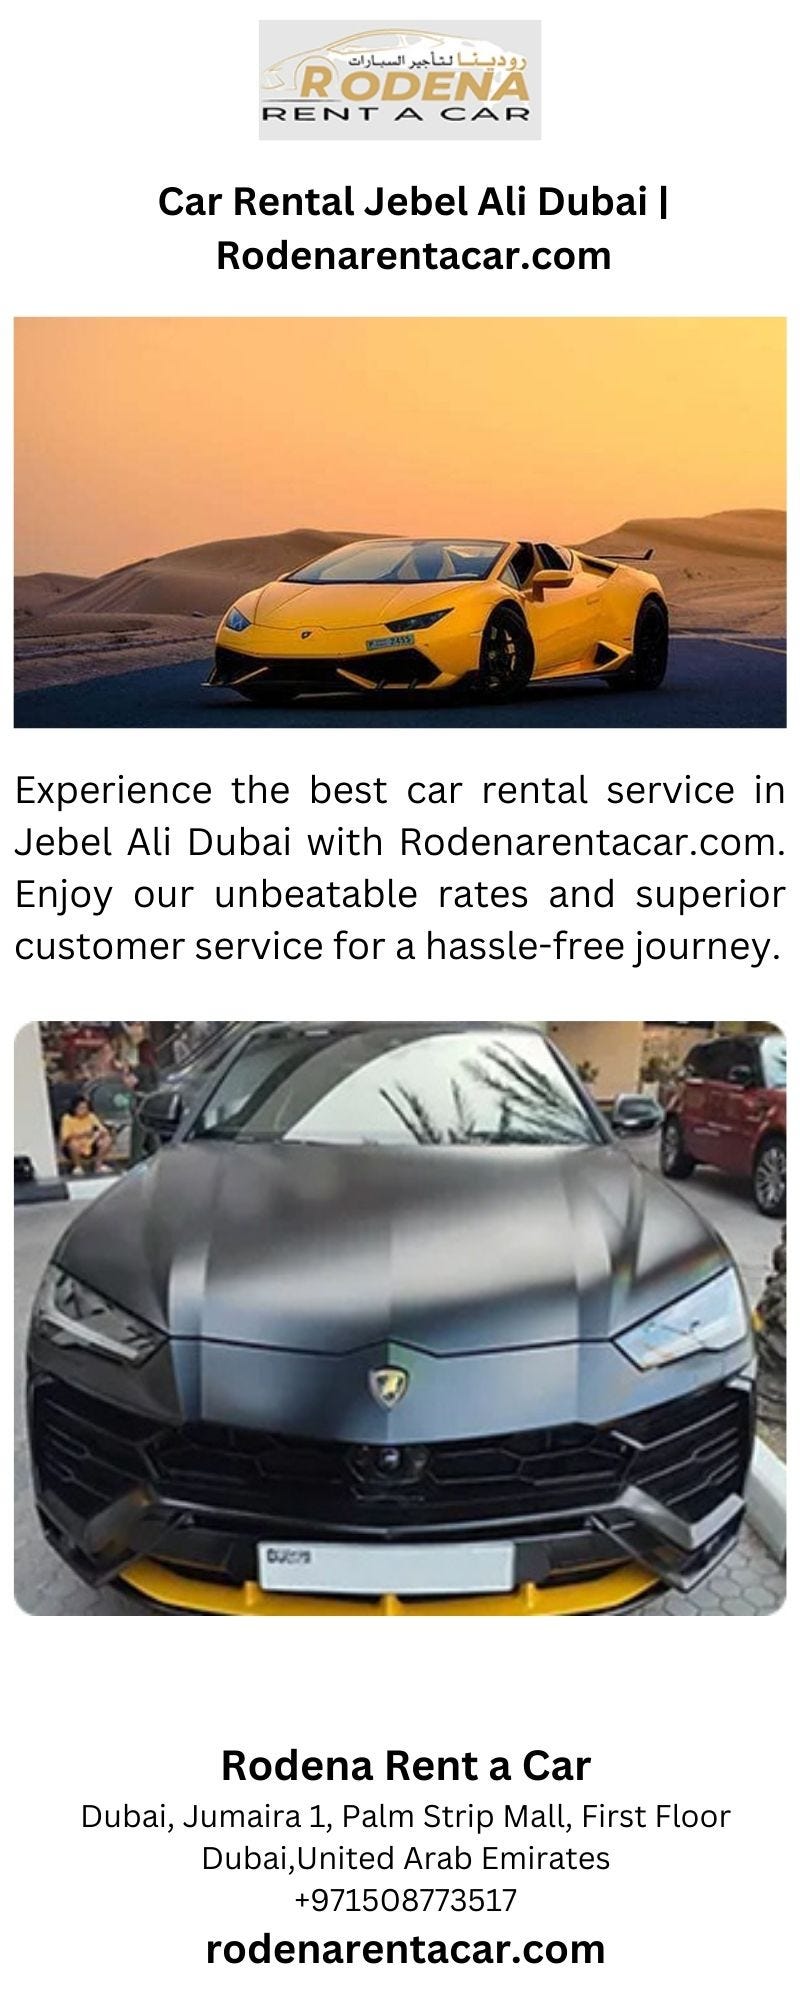 Car Rental Jebel Ali Dubai | Rodenarentacar.com - Rodena Rent a Car - Medium